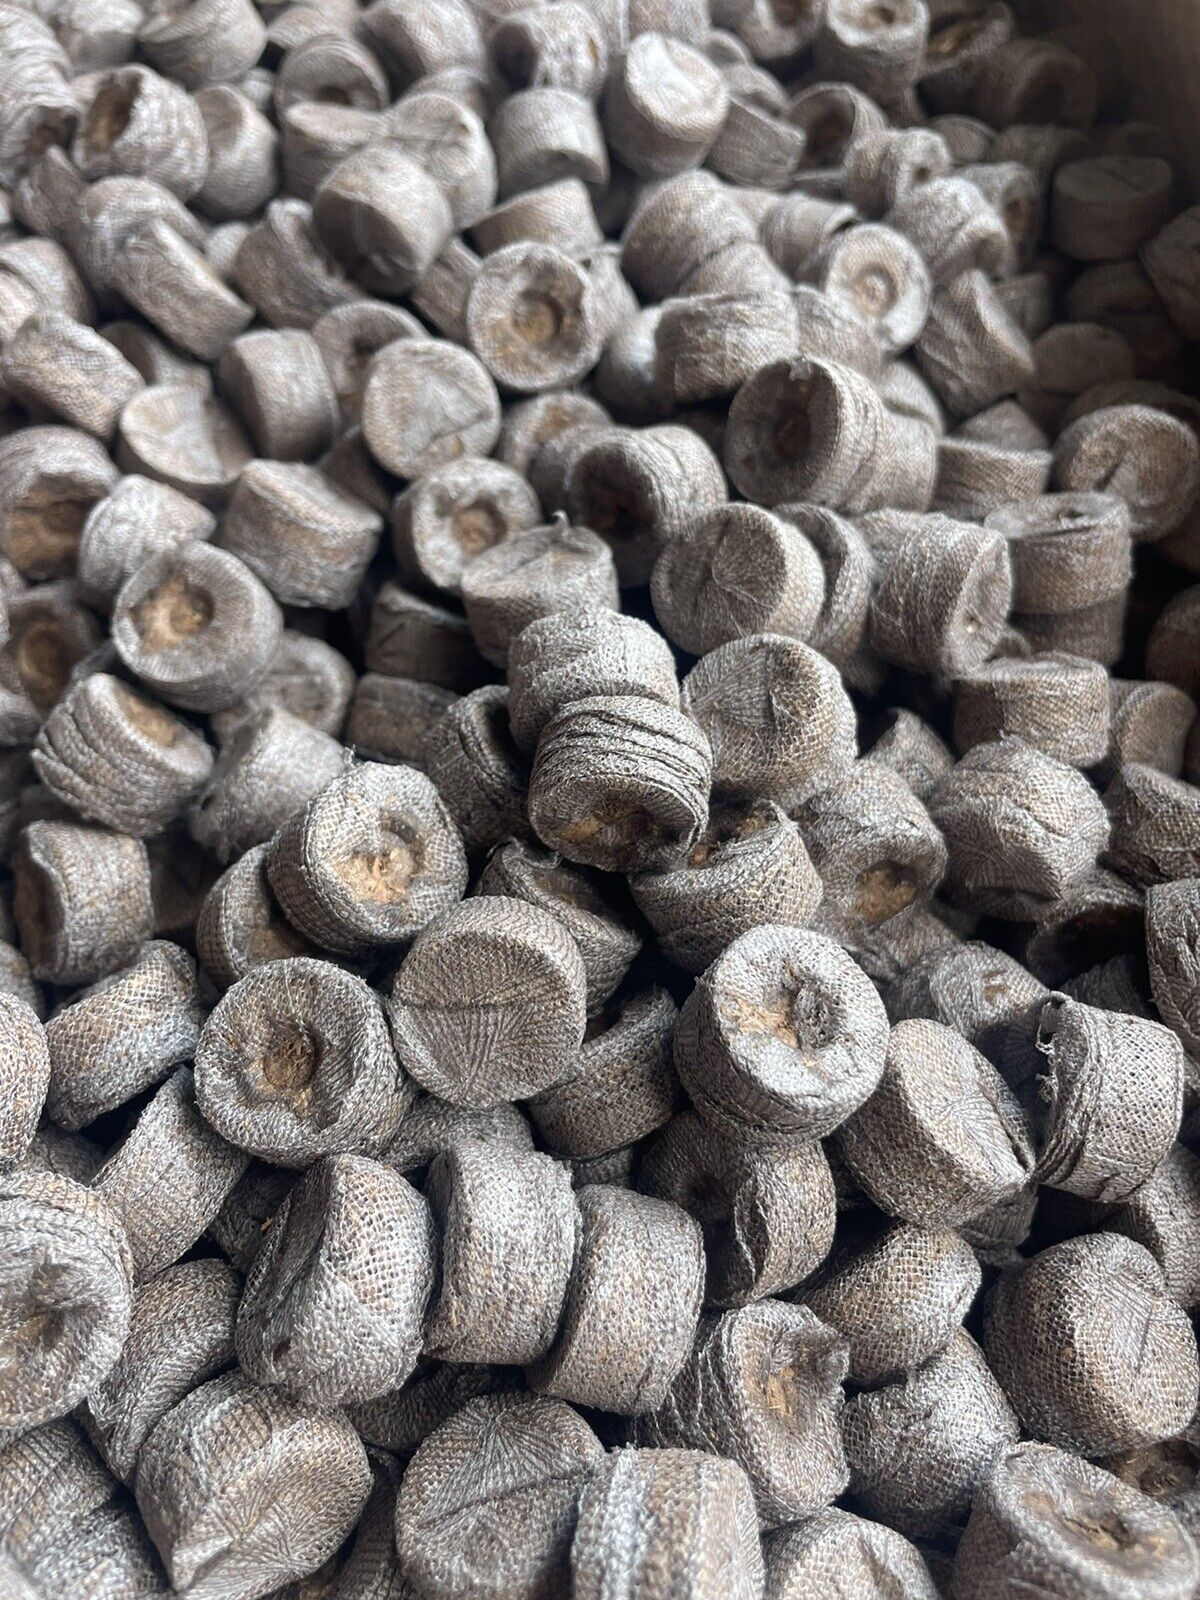 Jiffy Peat Pellets 18mm, 10,25,50,100,200,300,500,1000, Seed Starting, Fast Ship